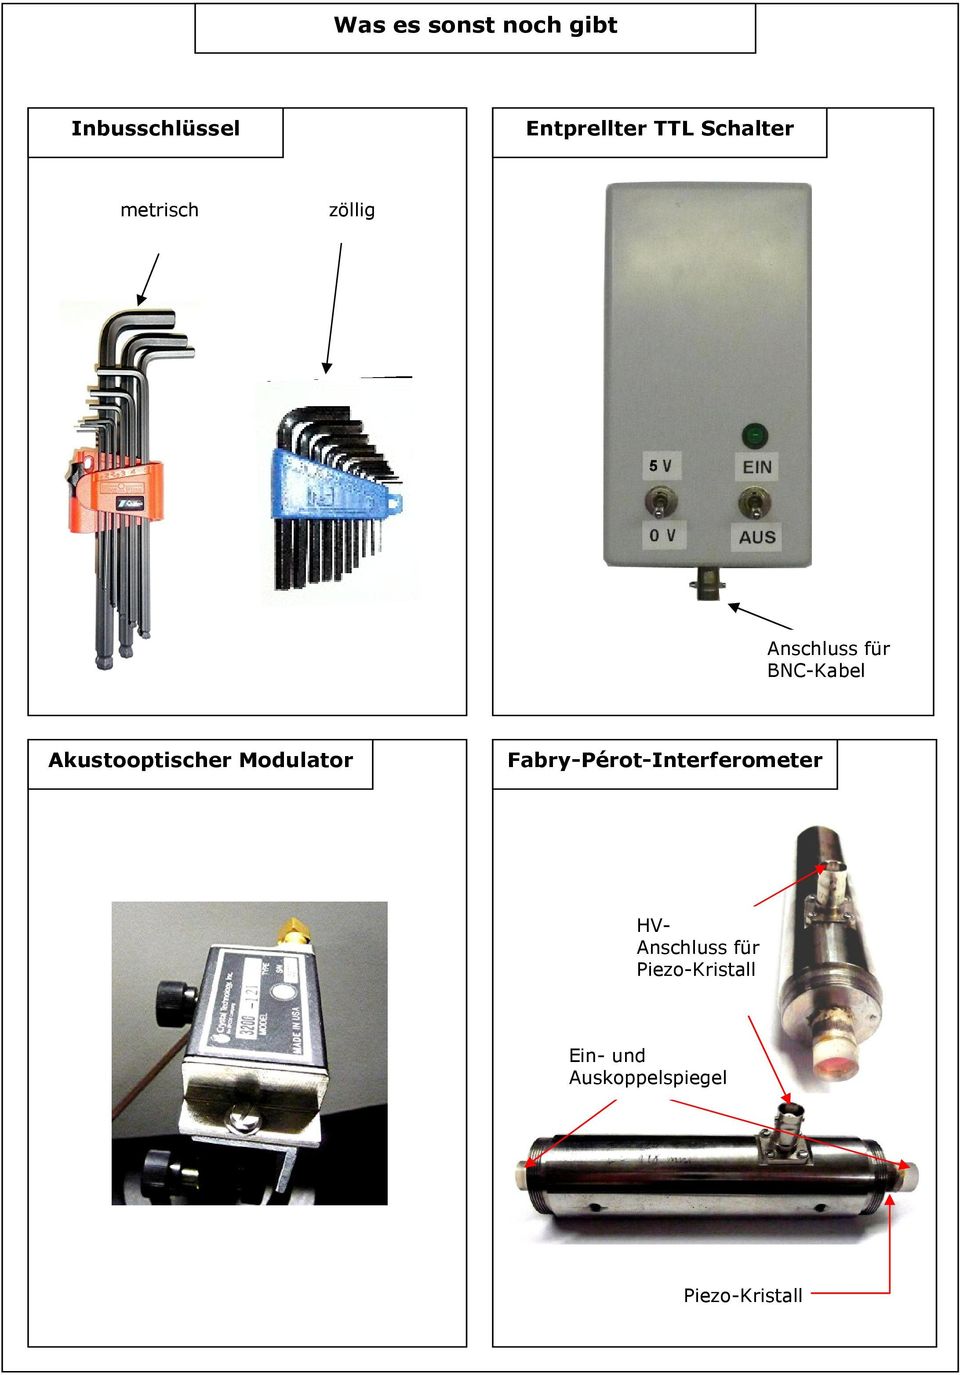 Akustooptischer Modulator Fabry-Pérot-Interferometer HV-